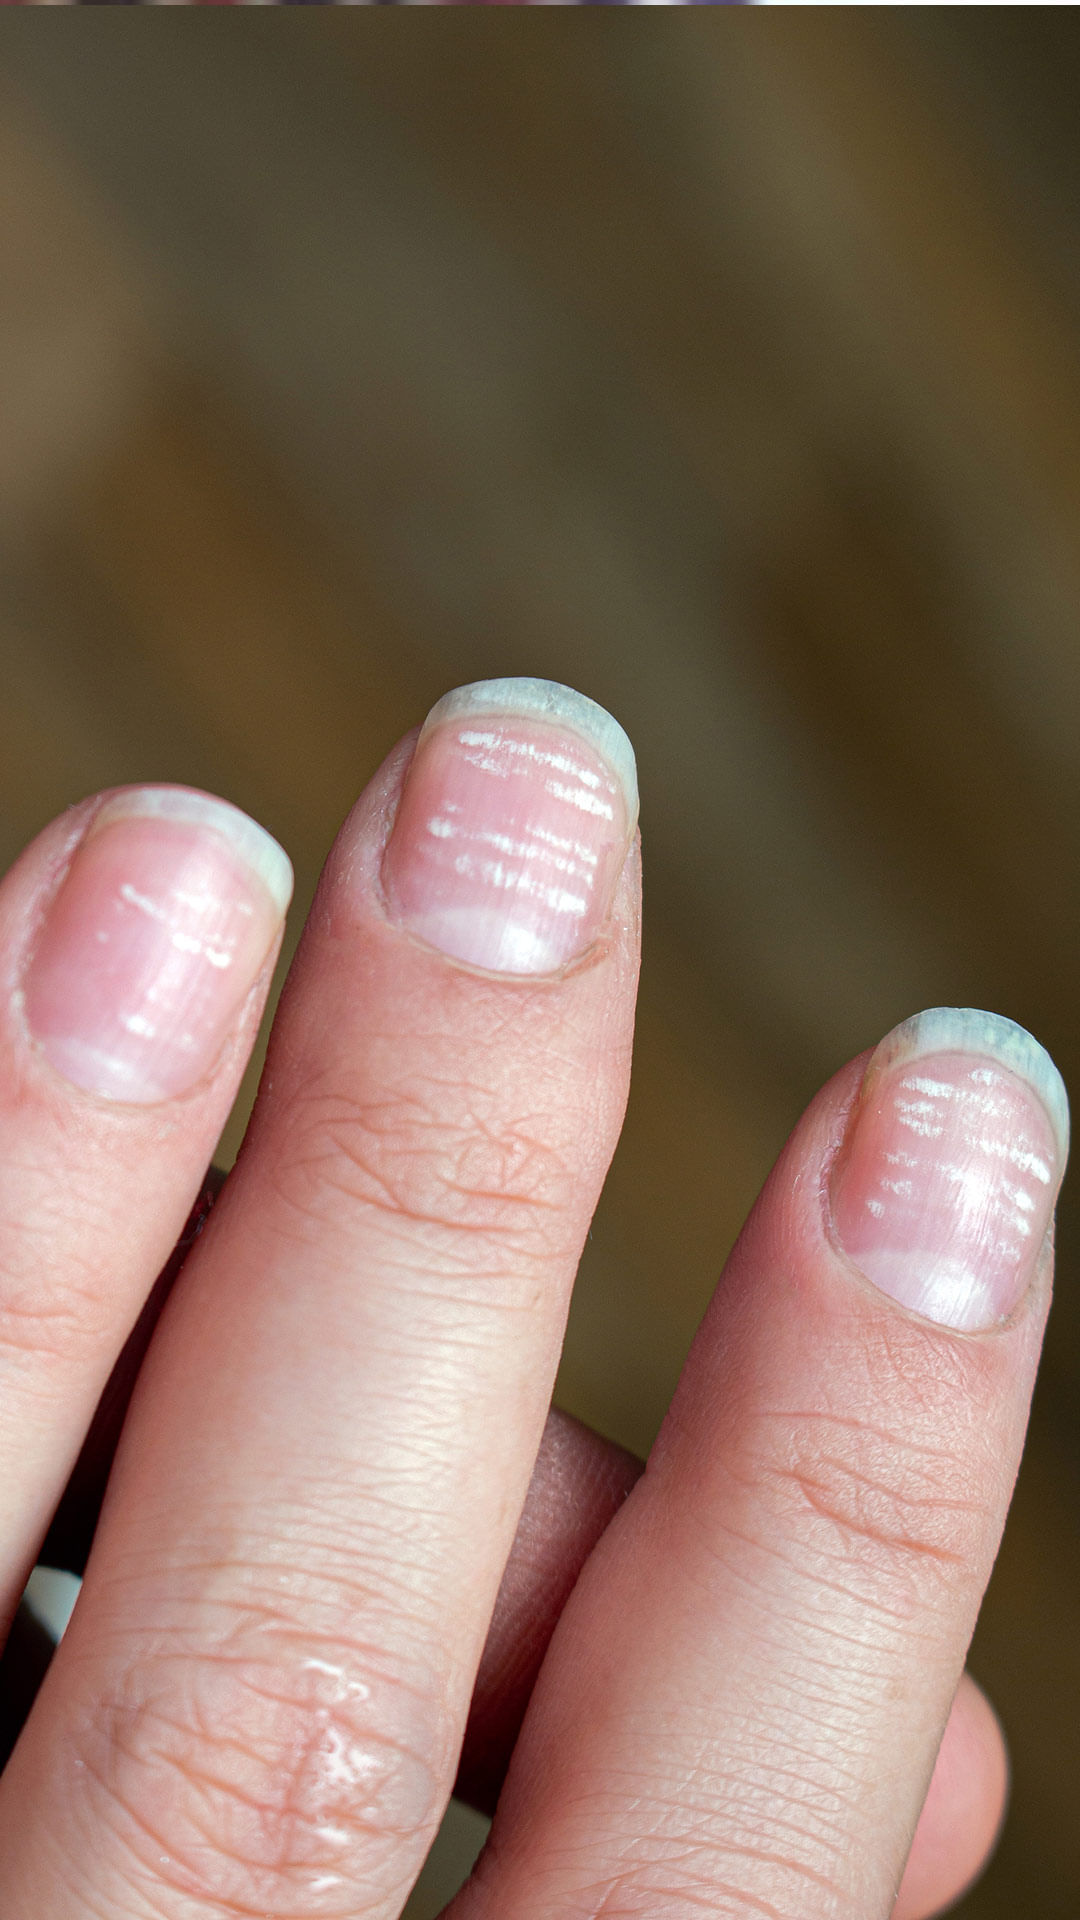 Banish white spots on nails - Shop Nailner Nail Fungus Treatment.